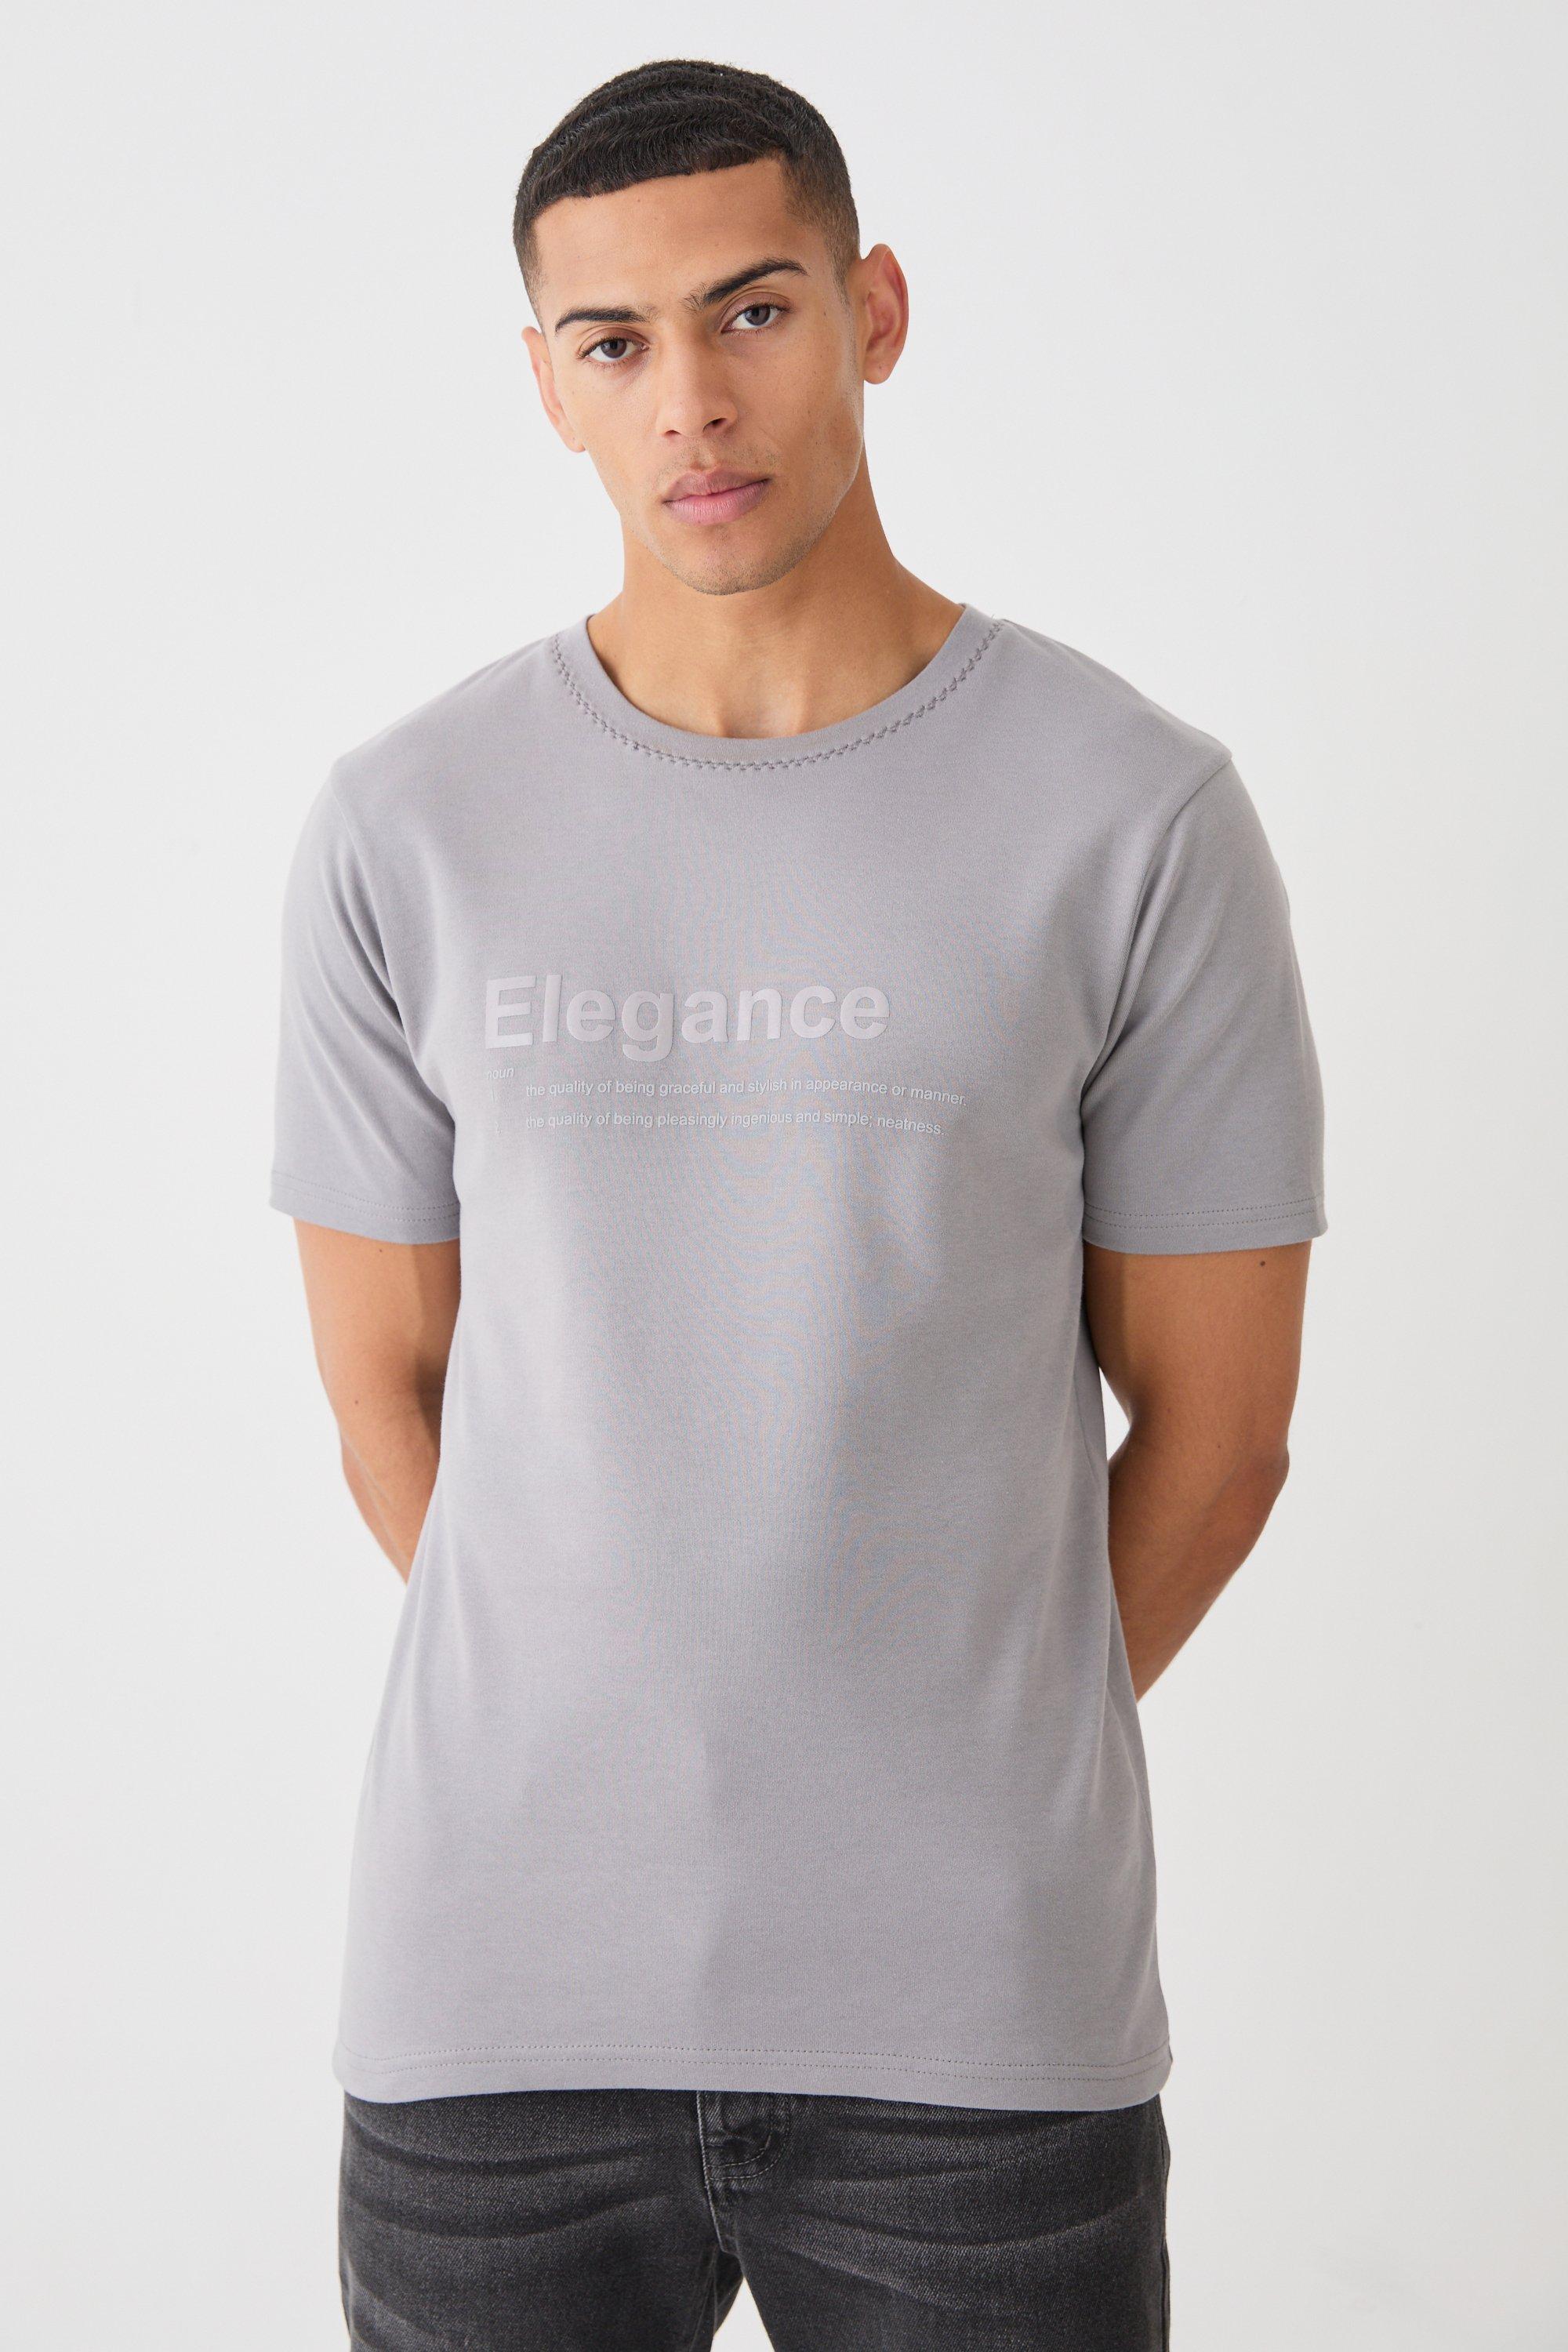 Mens Grey Elegance Gloss Print T-shirt, Grey